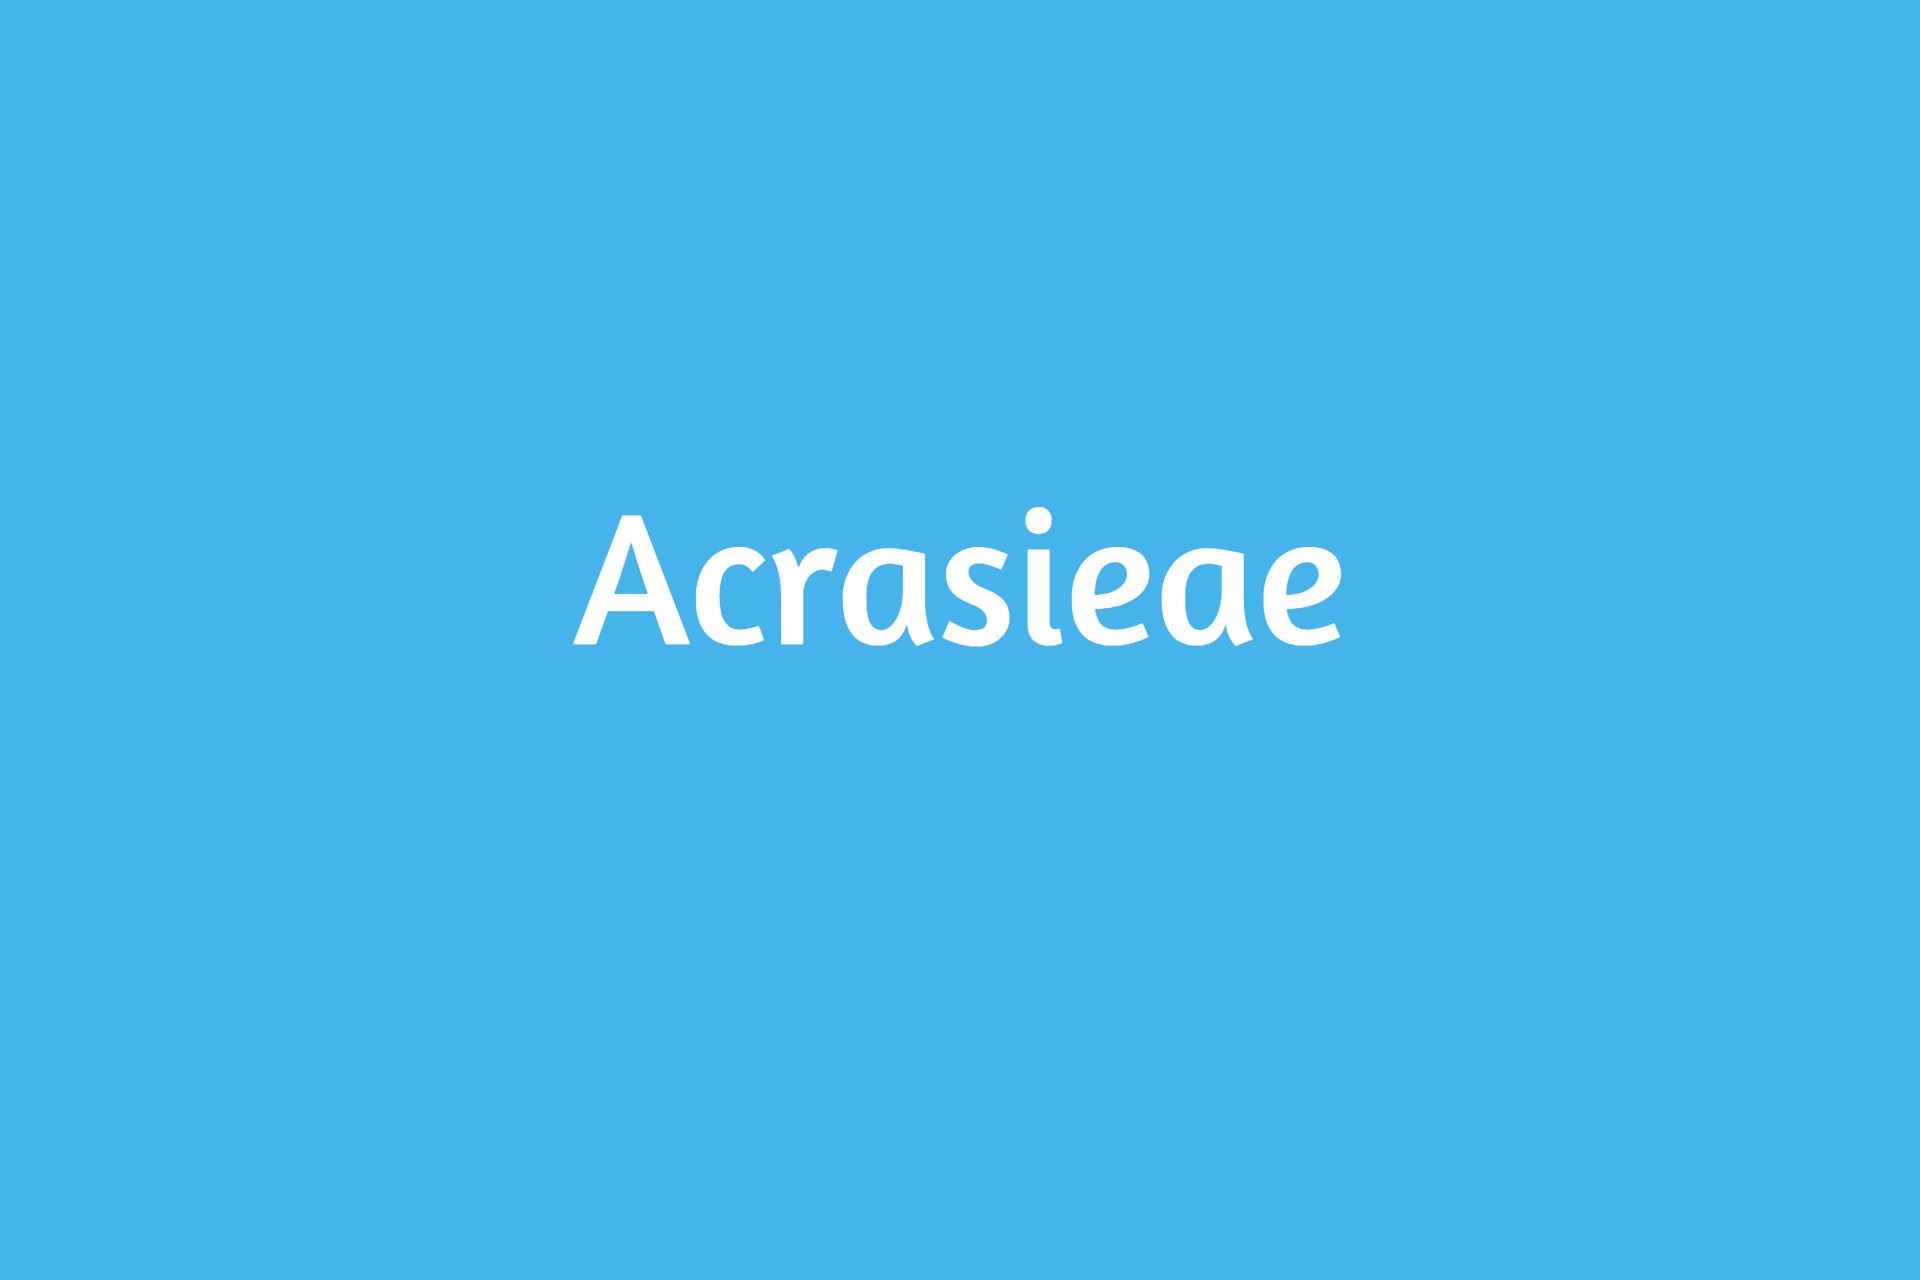 Acrasieae